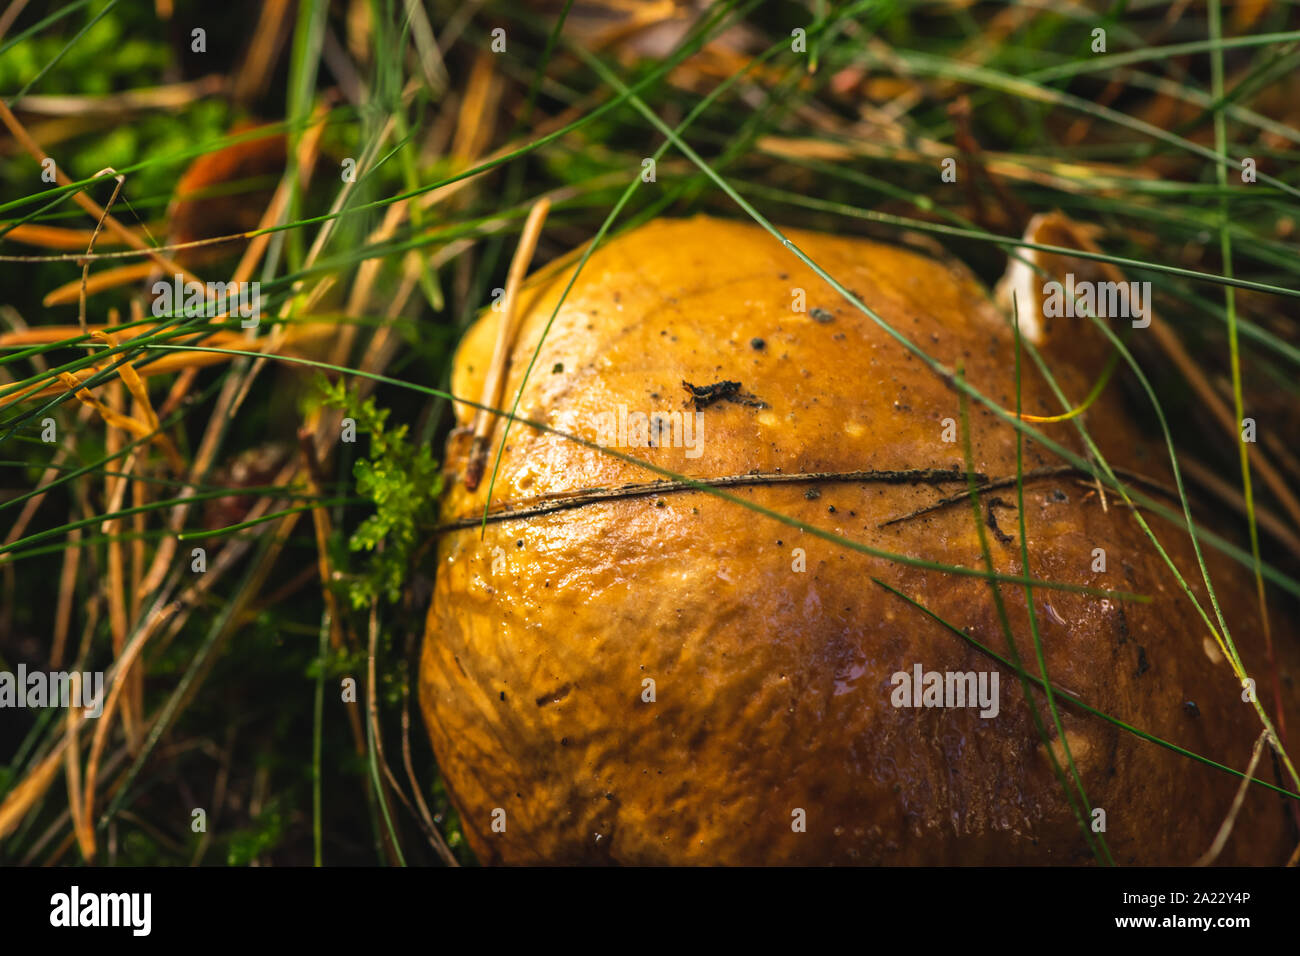 Big old Boletus Edulis mushroom growing in forest. Stock Photo